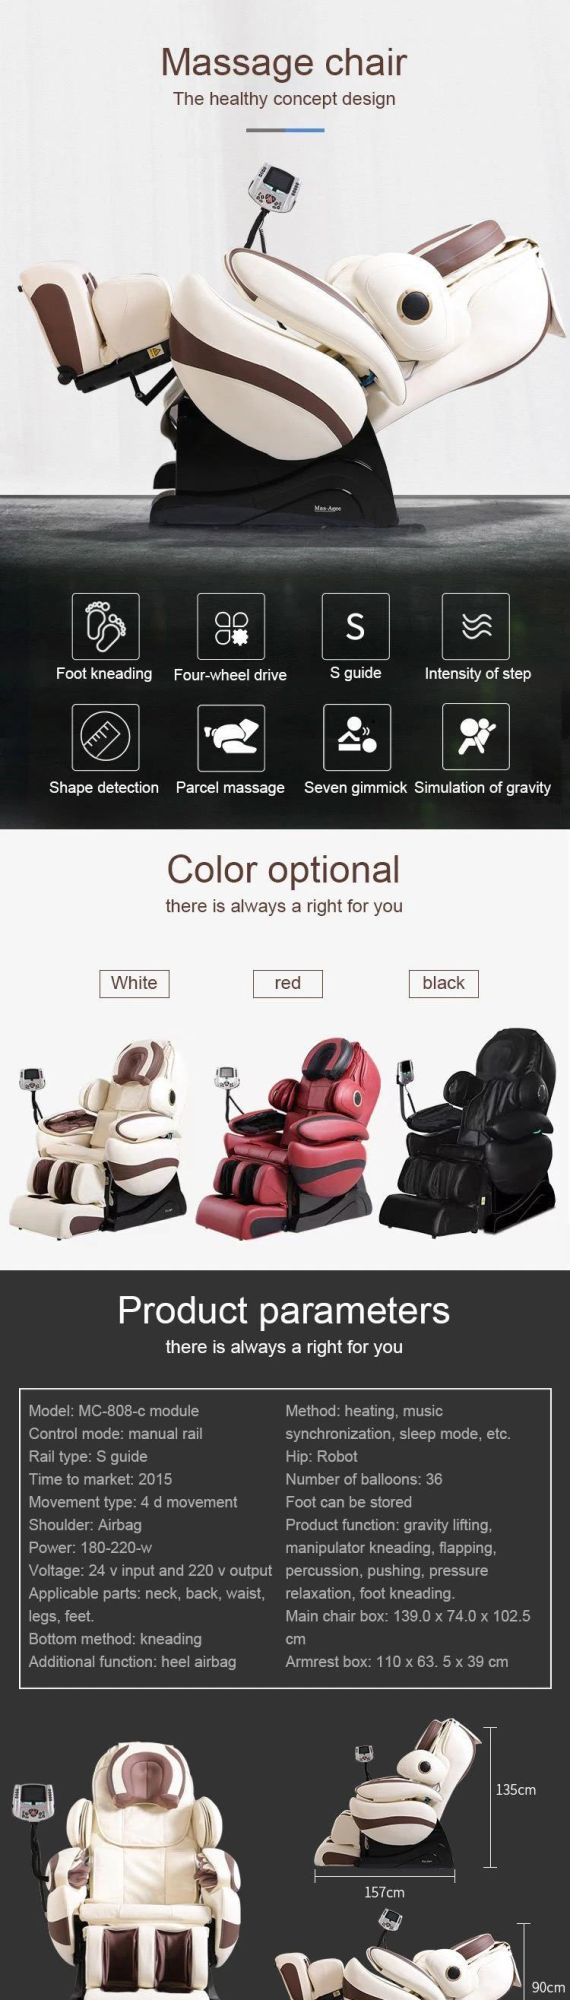 Luxury Zero Gravity Electric Fully Body 3D Massage Chair